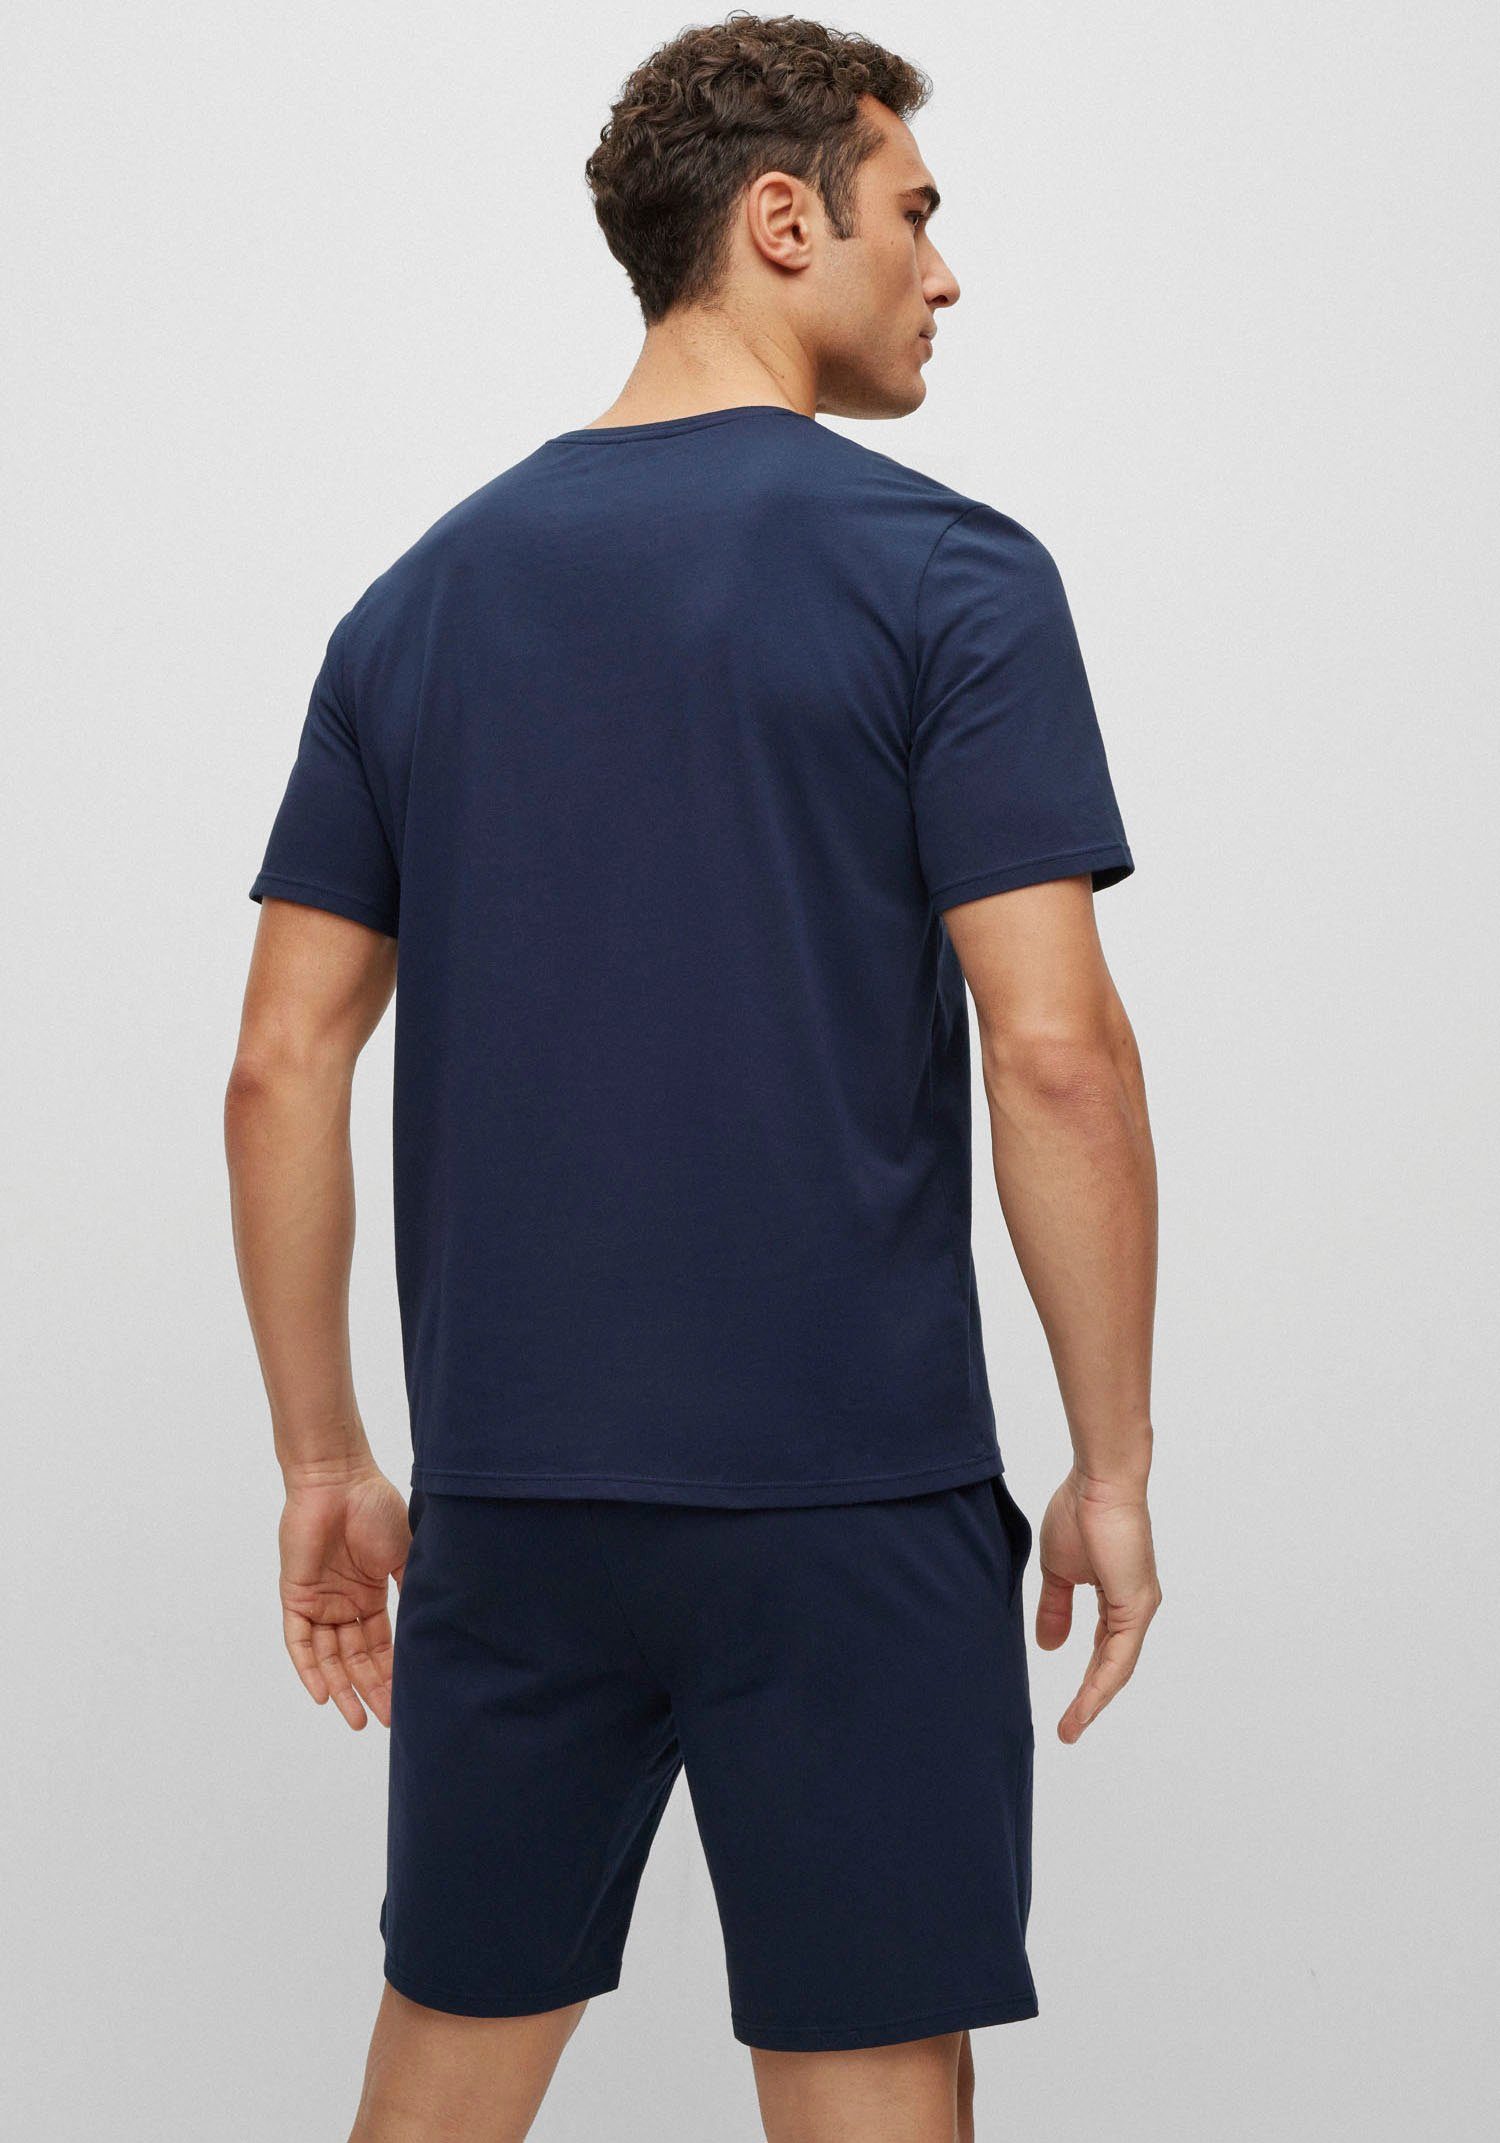 BOSS T-Shirt mit Logodruck dunkelblau